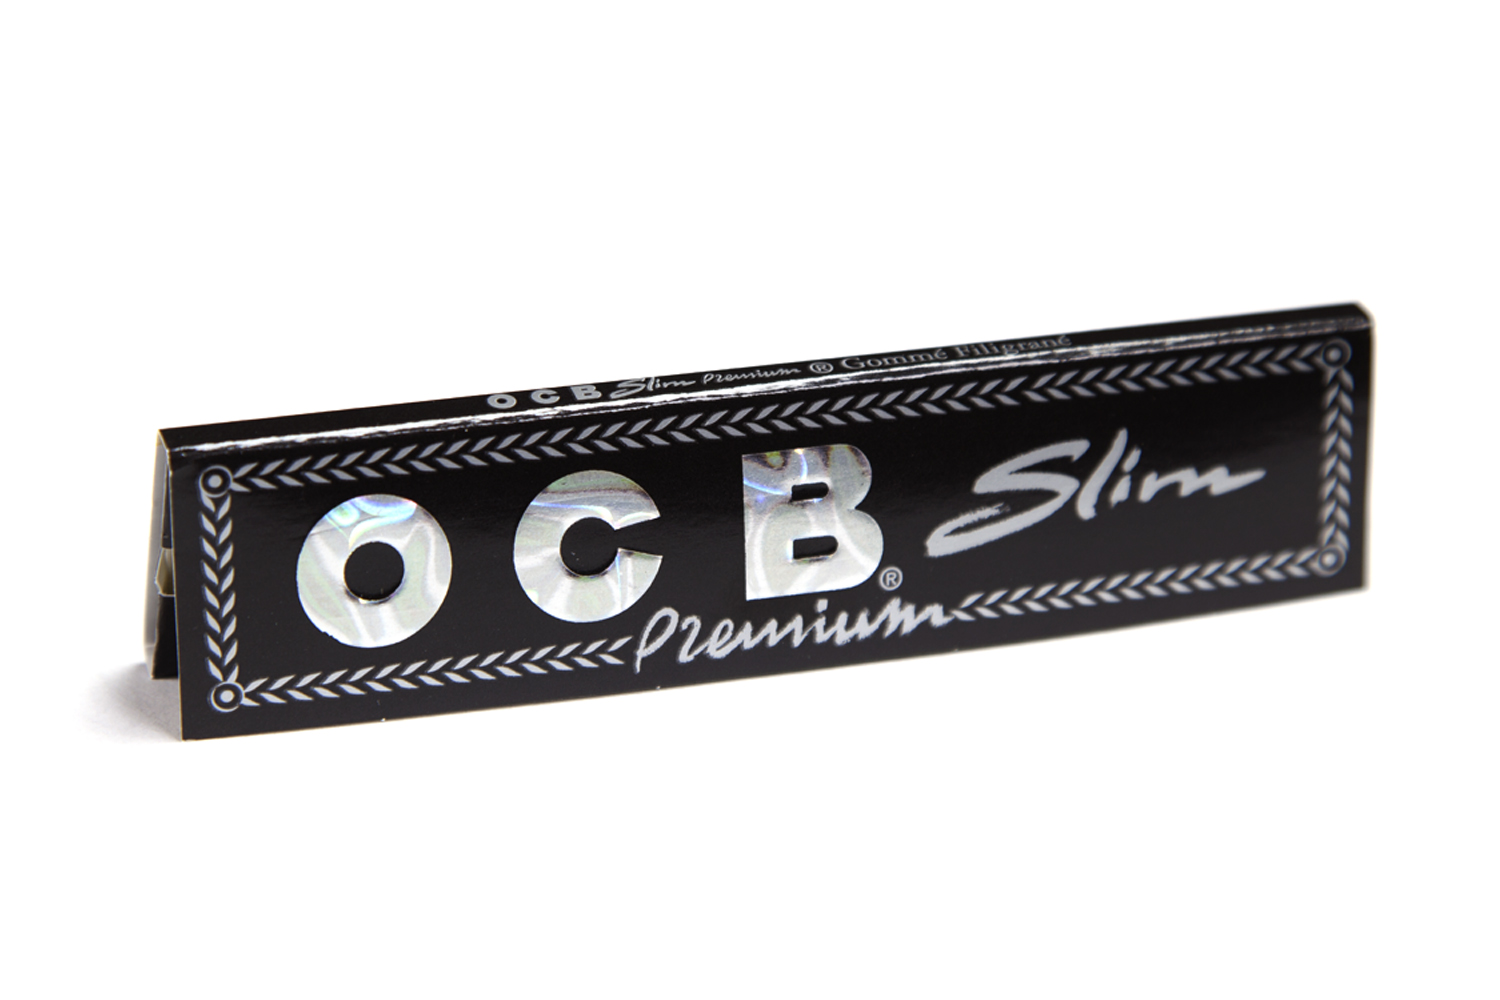 OCB Premium King Slim — OCB Rolling Papers